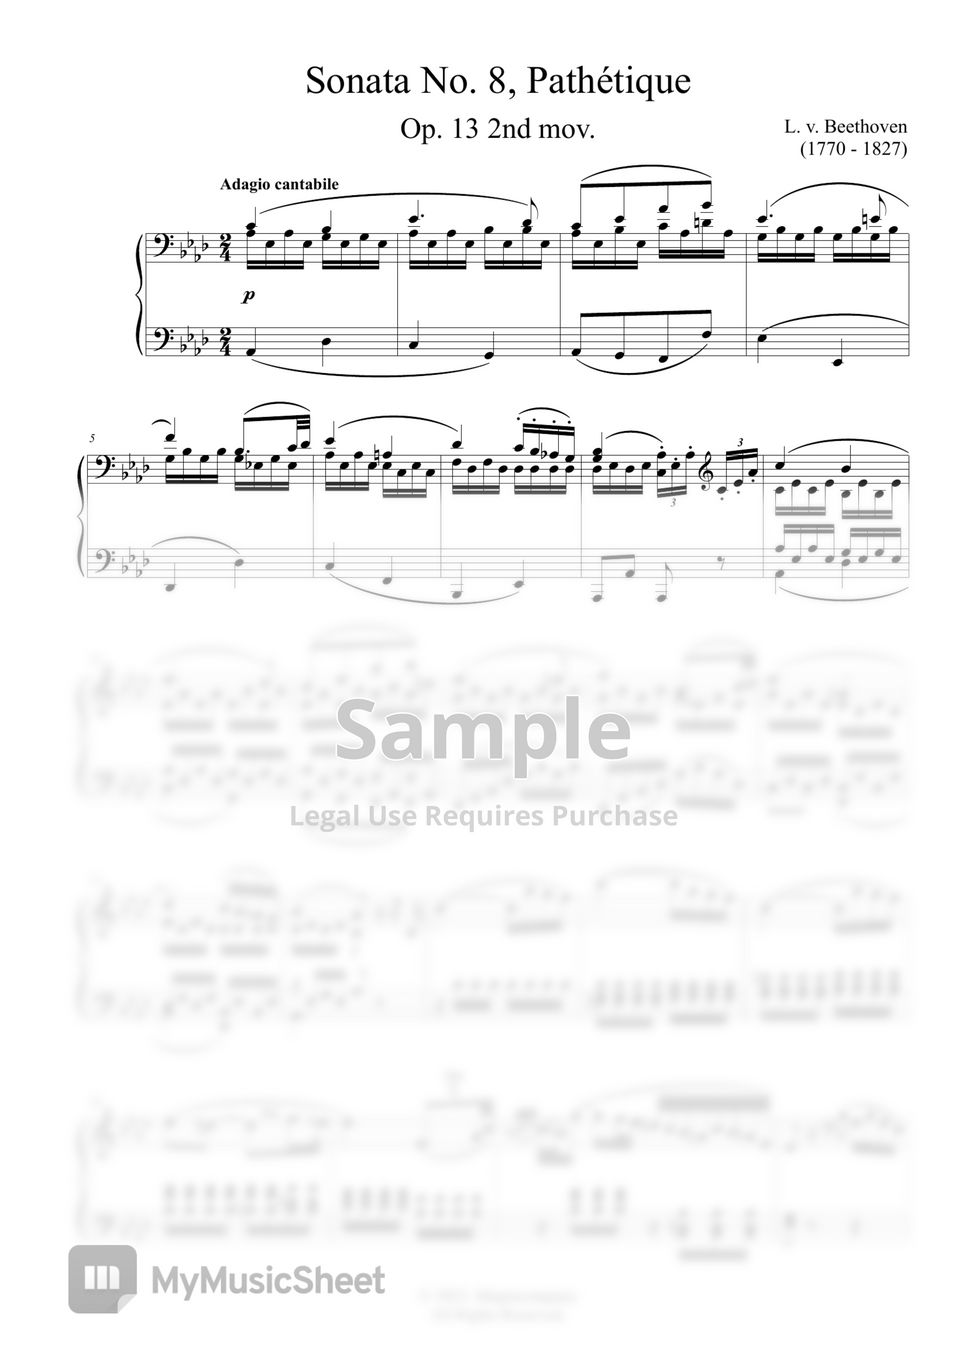 L. V. Beethoven - Pathetique (Piano Sonata No.8, 2nd mov.)